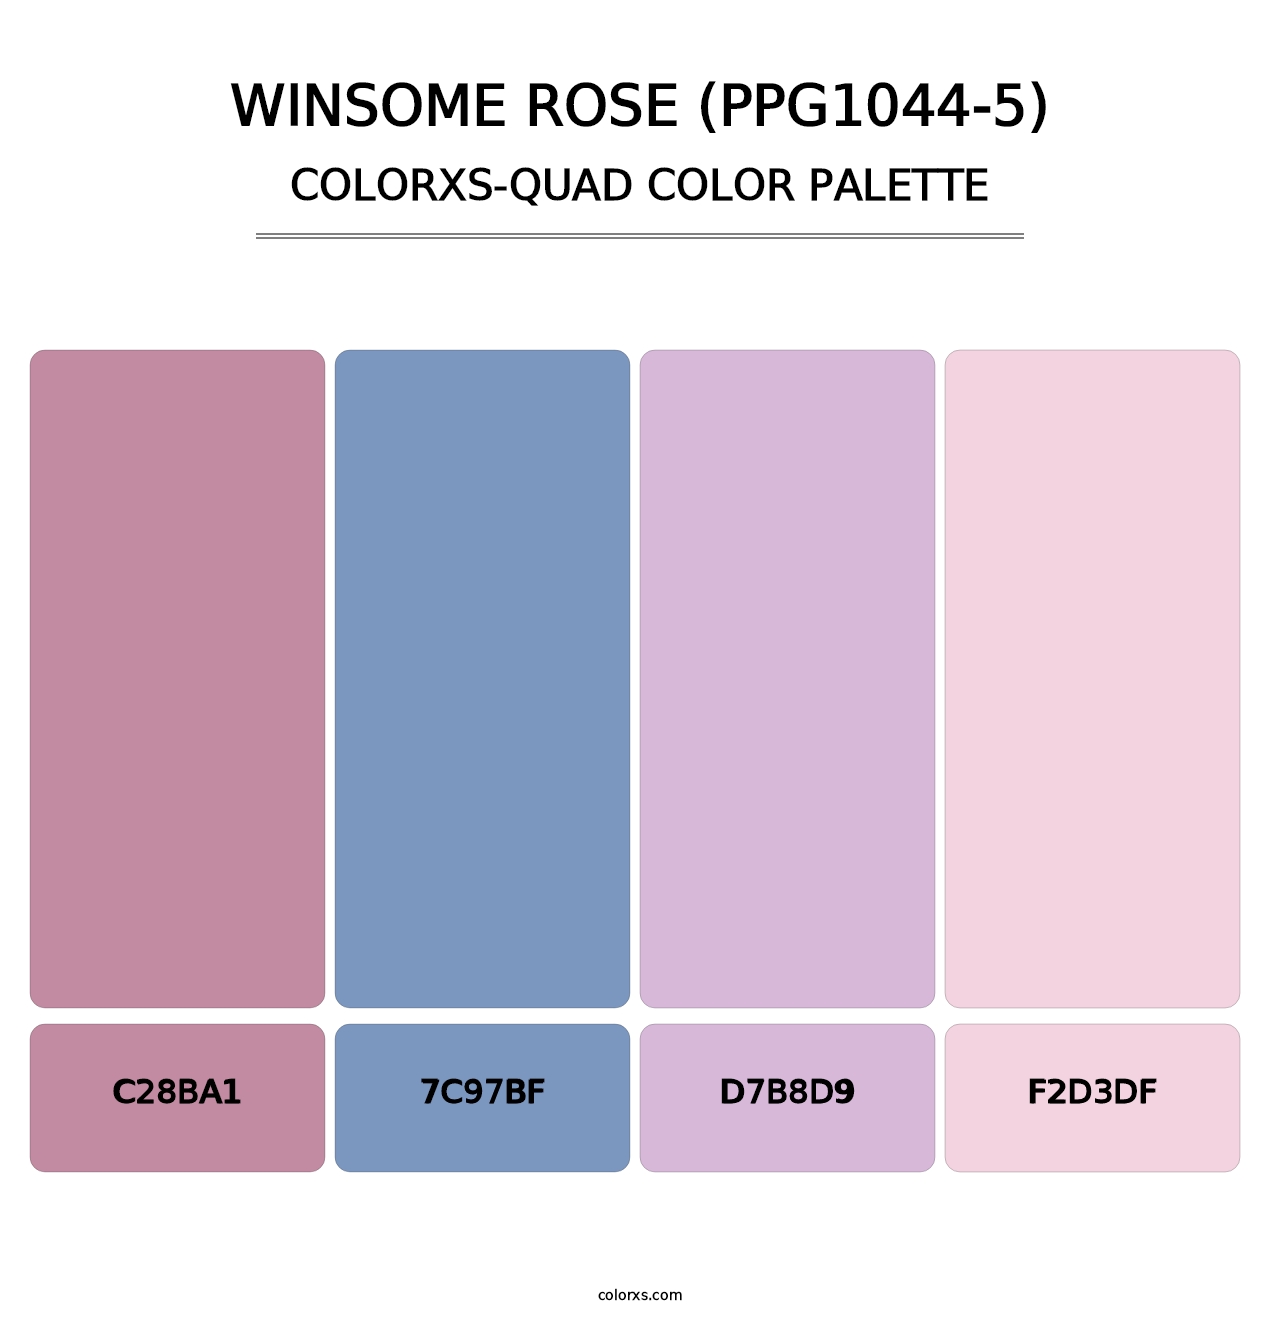 Winsome Rose (PPG1044-5) - Colorxs Quad Palette